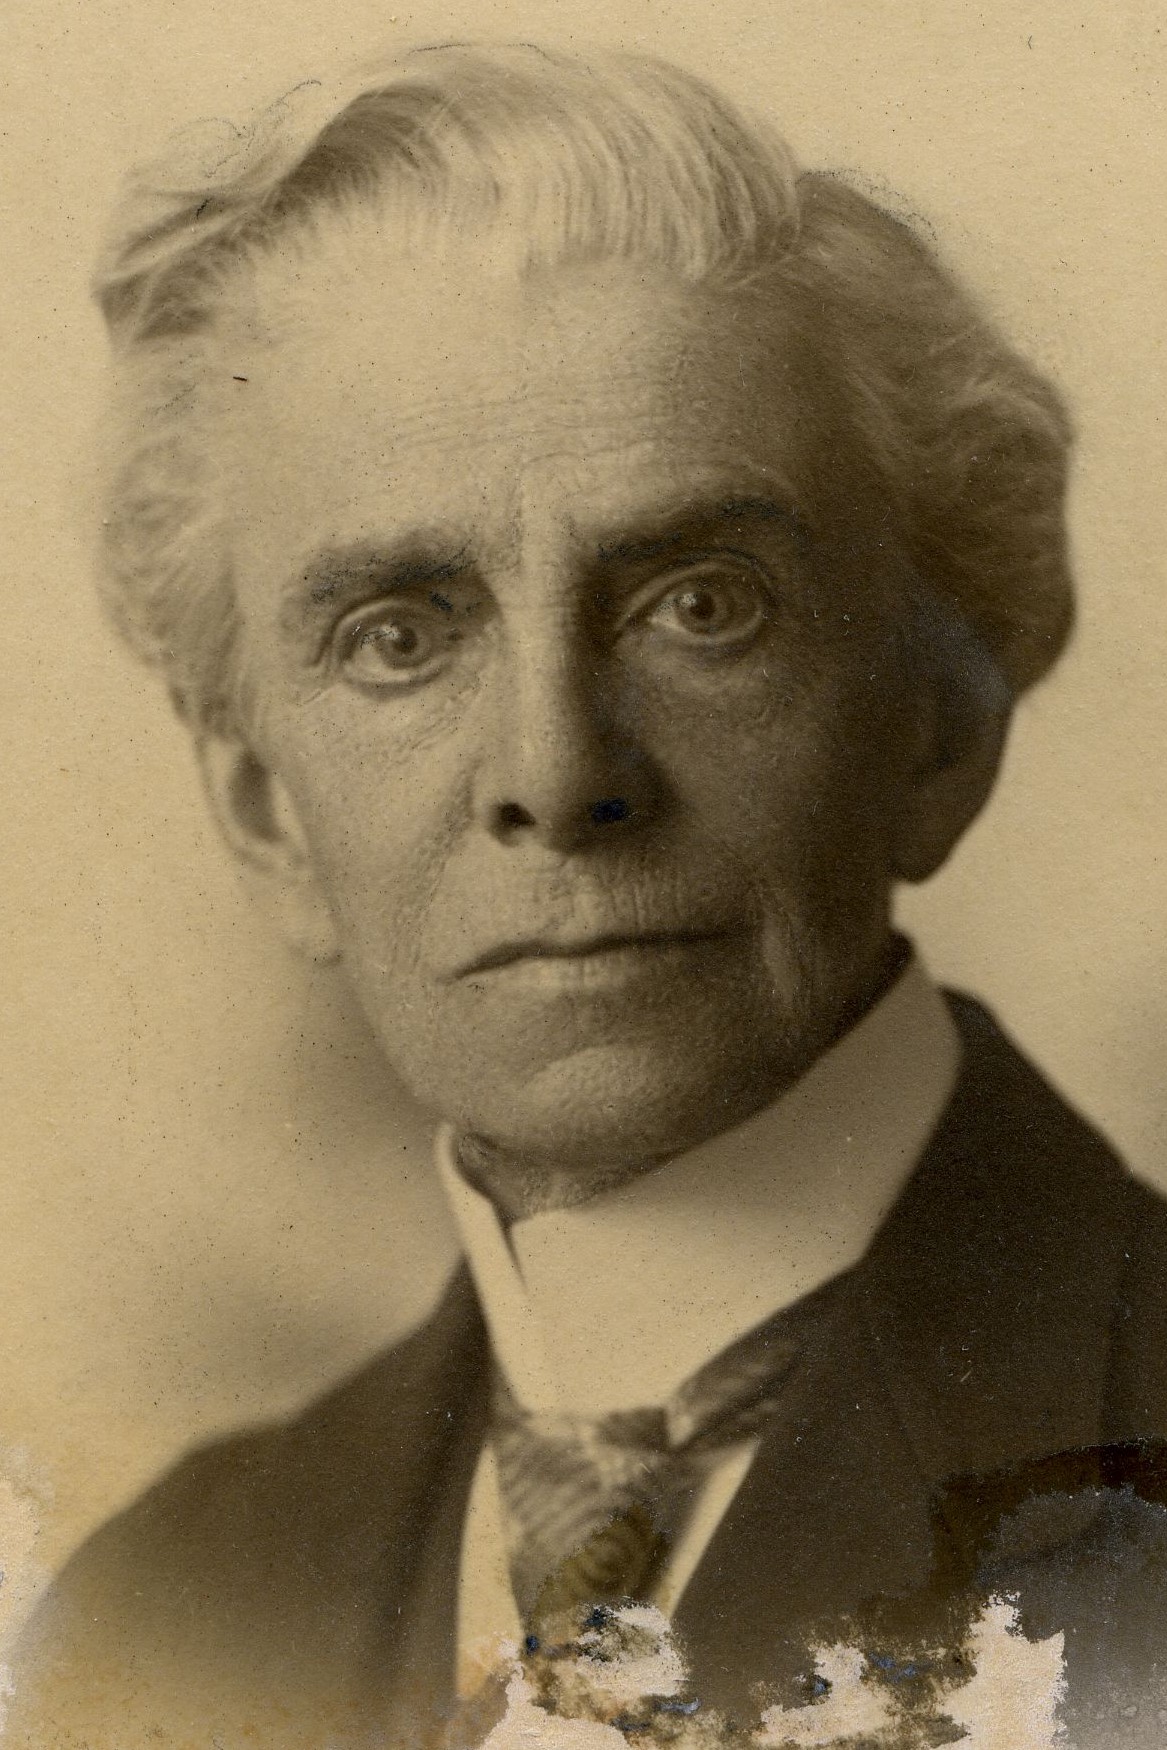 Member portrait of Edward L. Henry